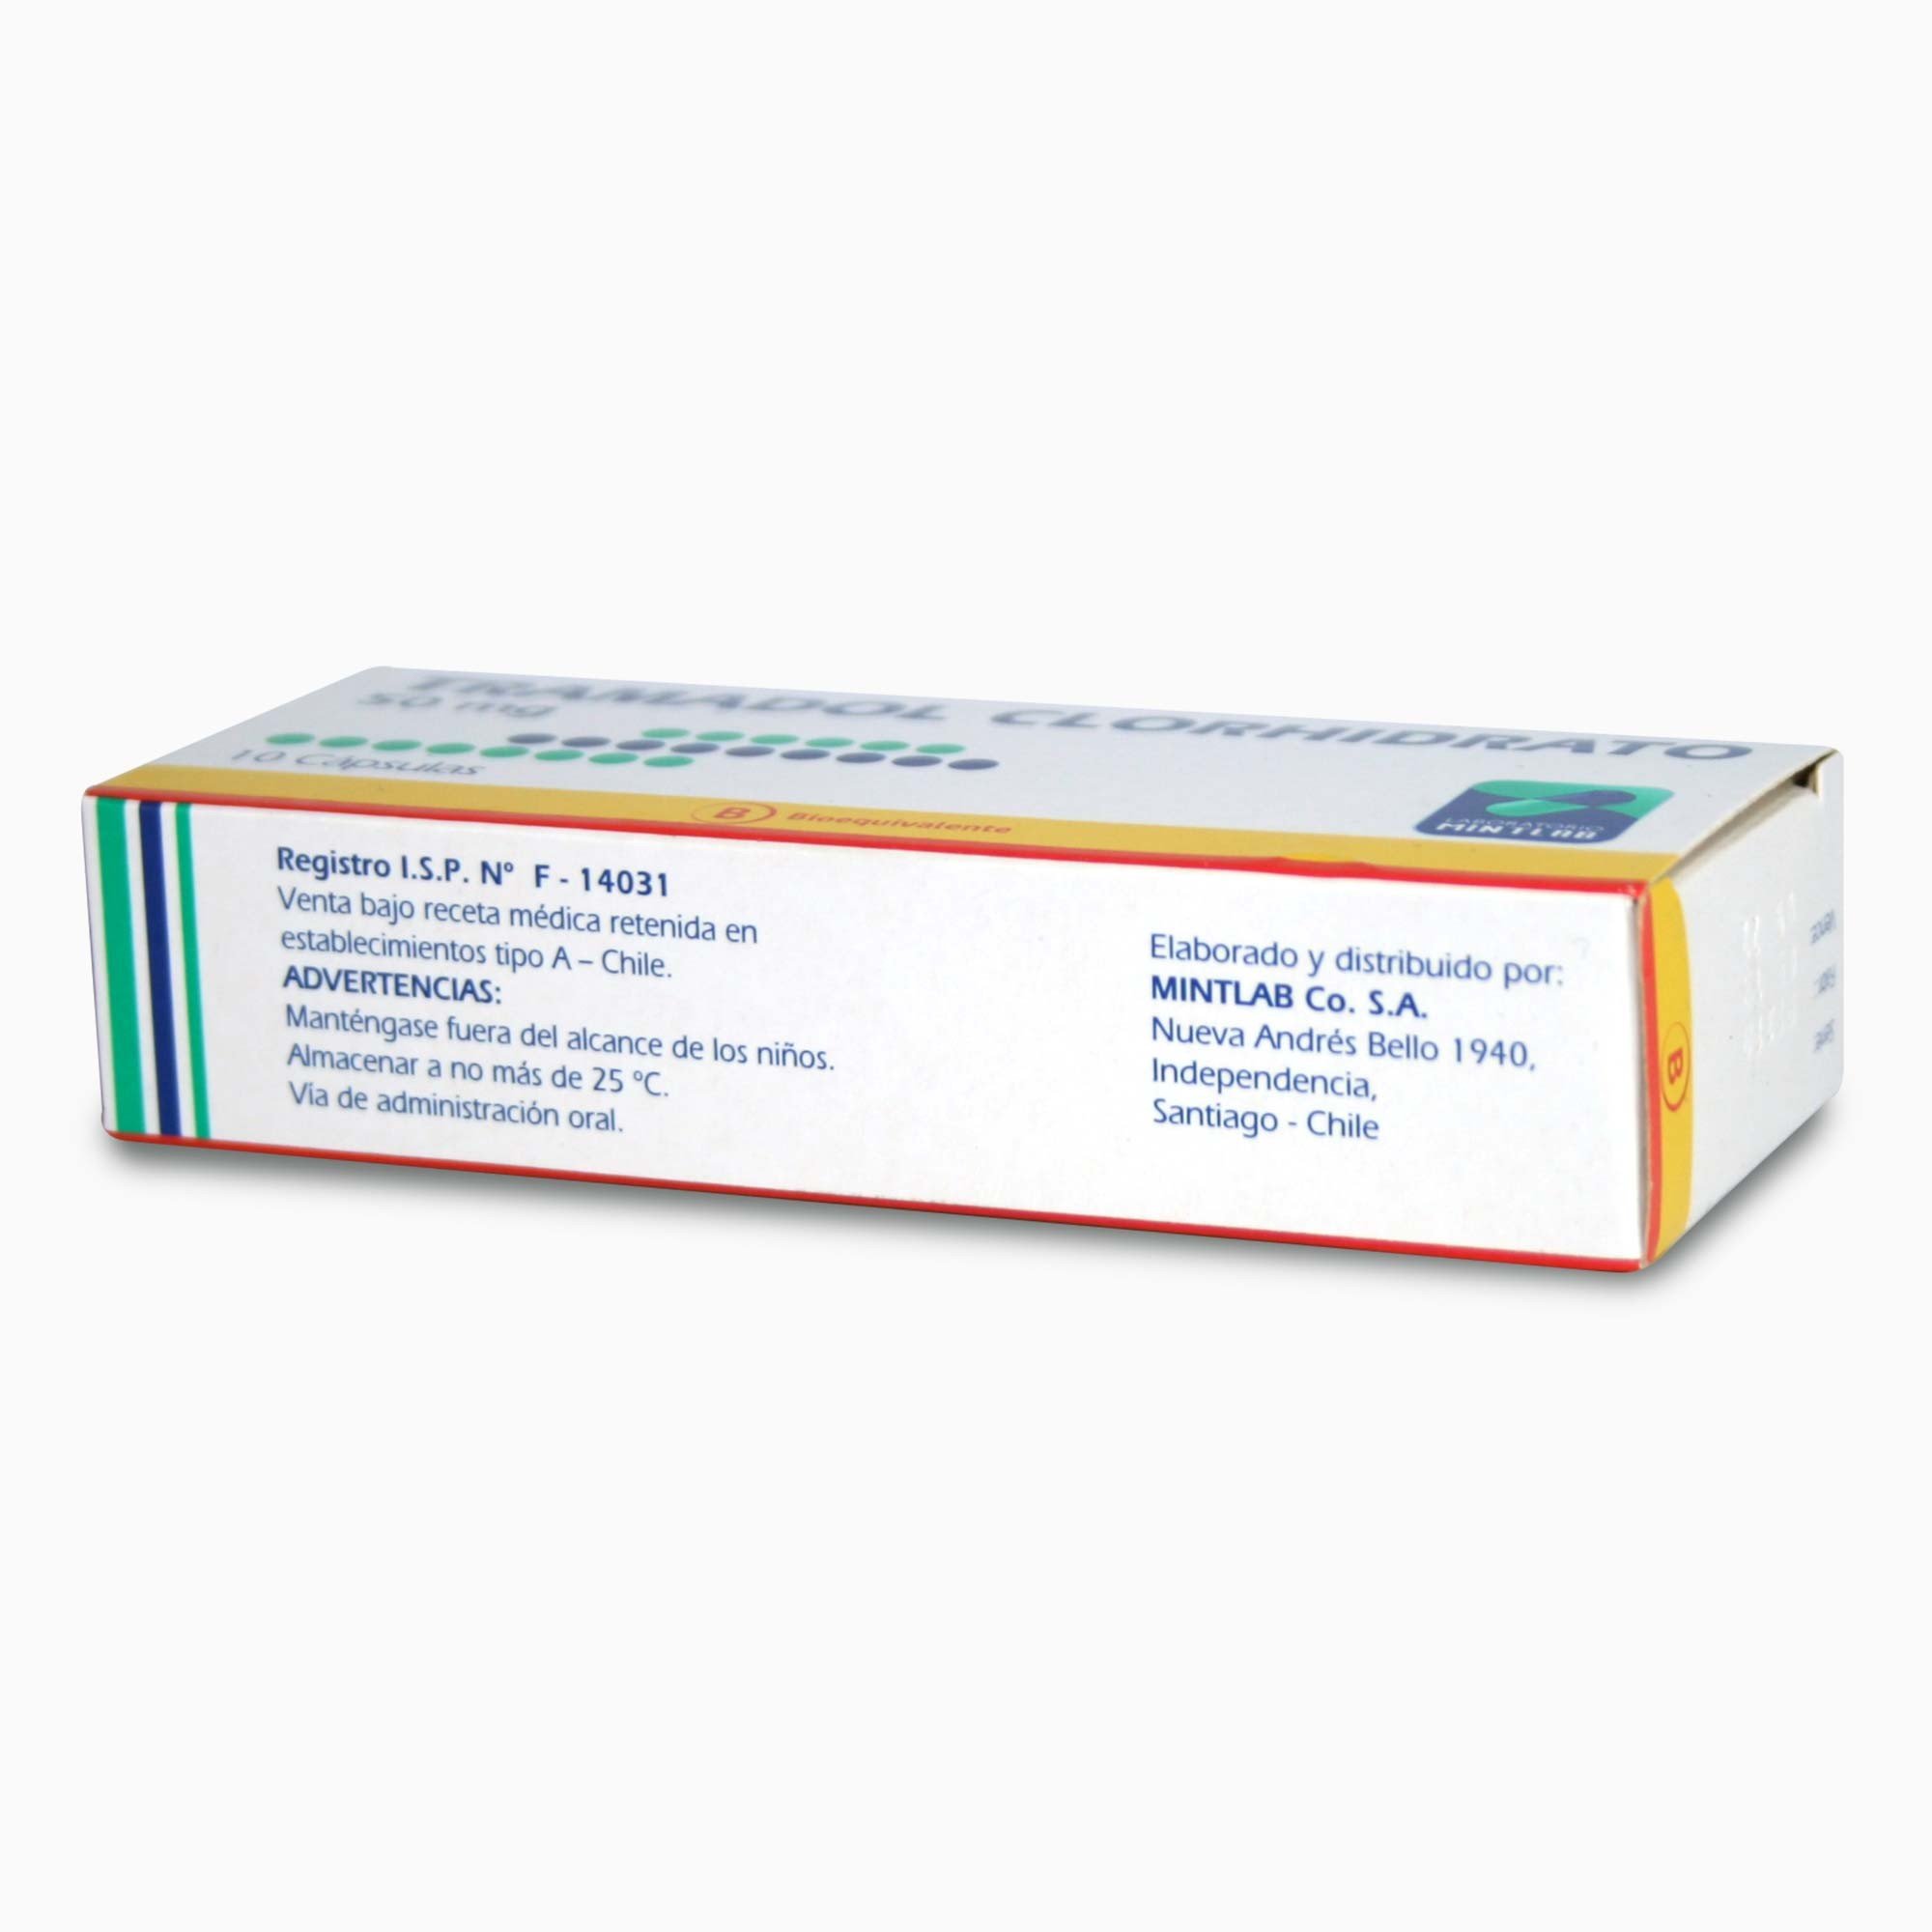 Tramadol Clorhidrato 50 mg 10 Cápsulas | Farmacias Cruz Verde